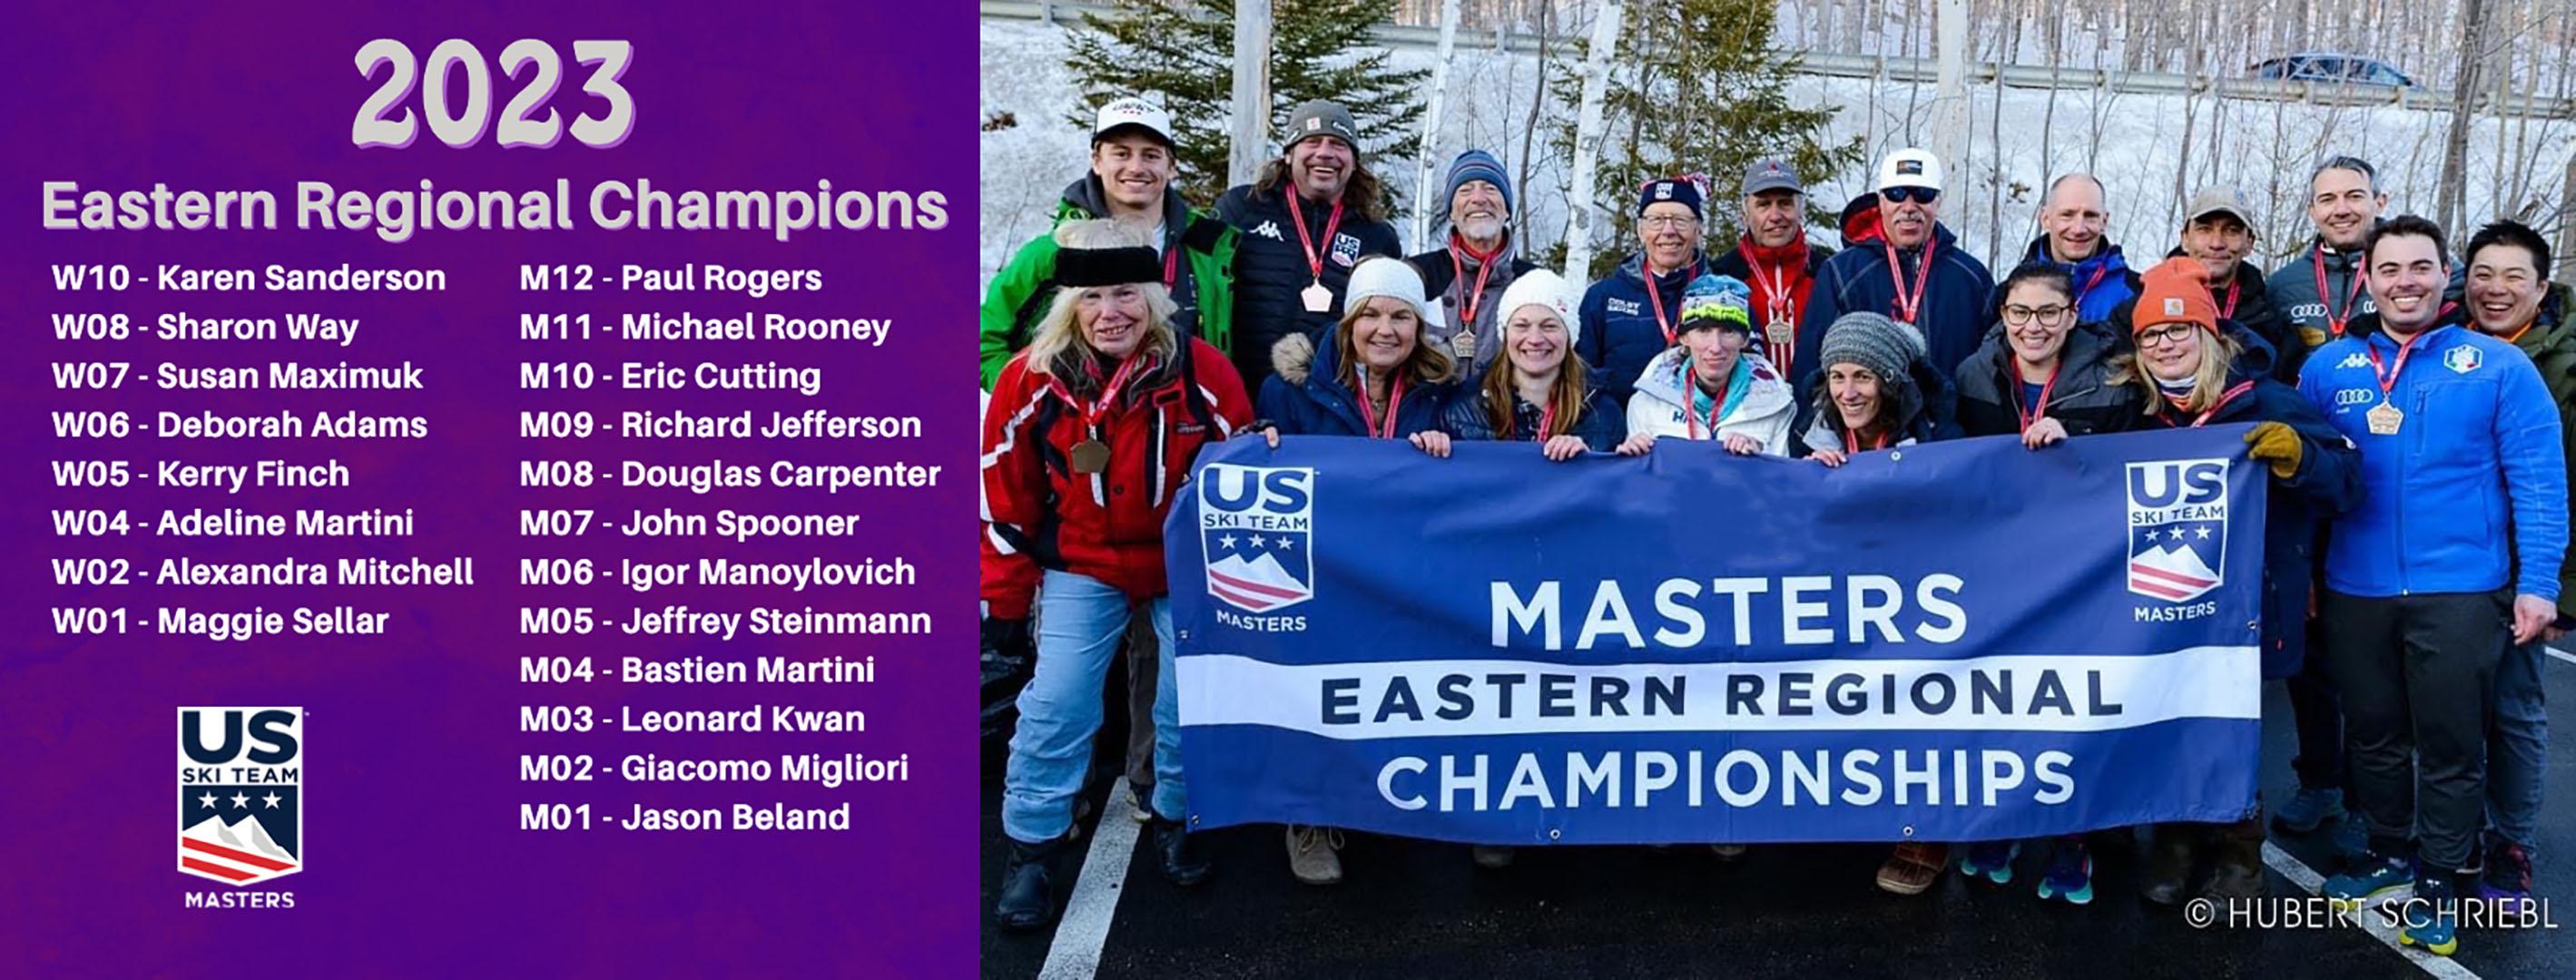 Masters Eastern Regional Championship Team Named